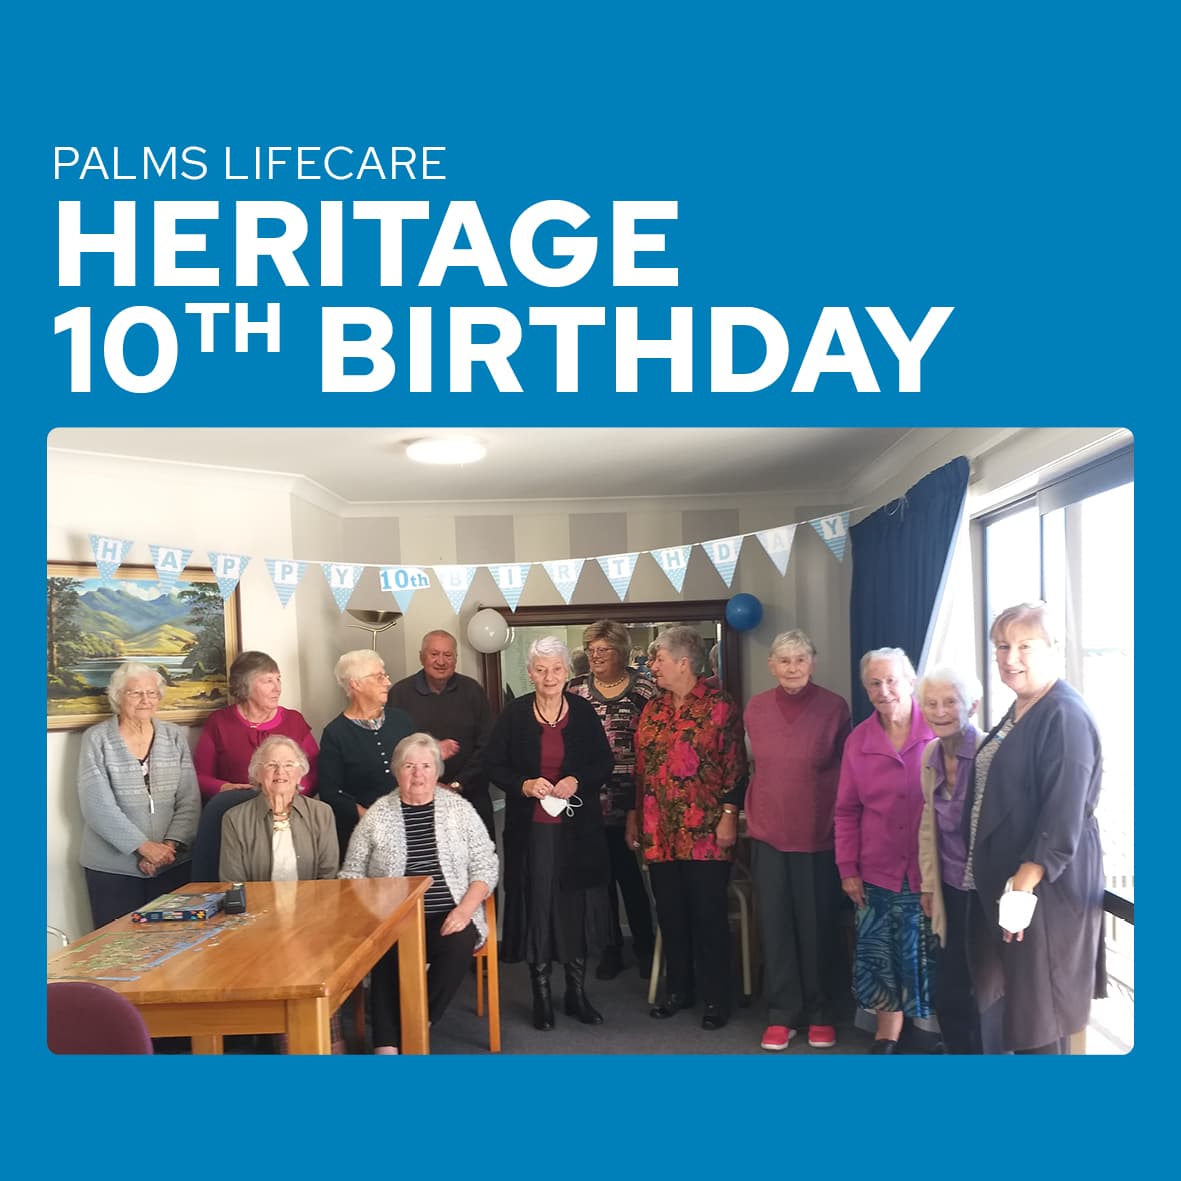 Palms Lifecare & Village celebrated Heritage Lifecare's 10th birthday